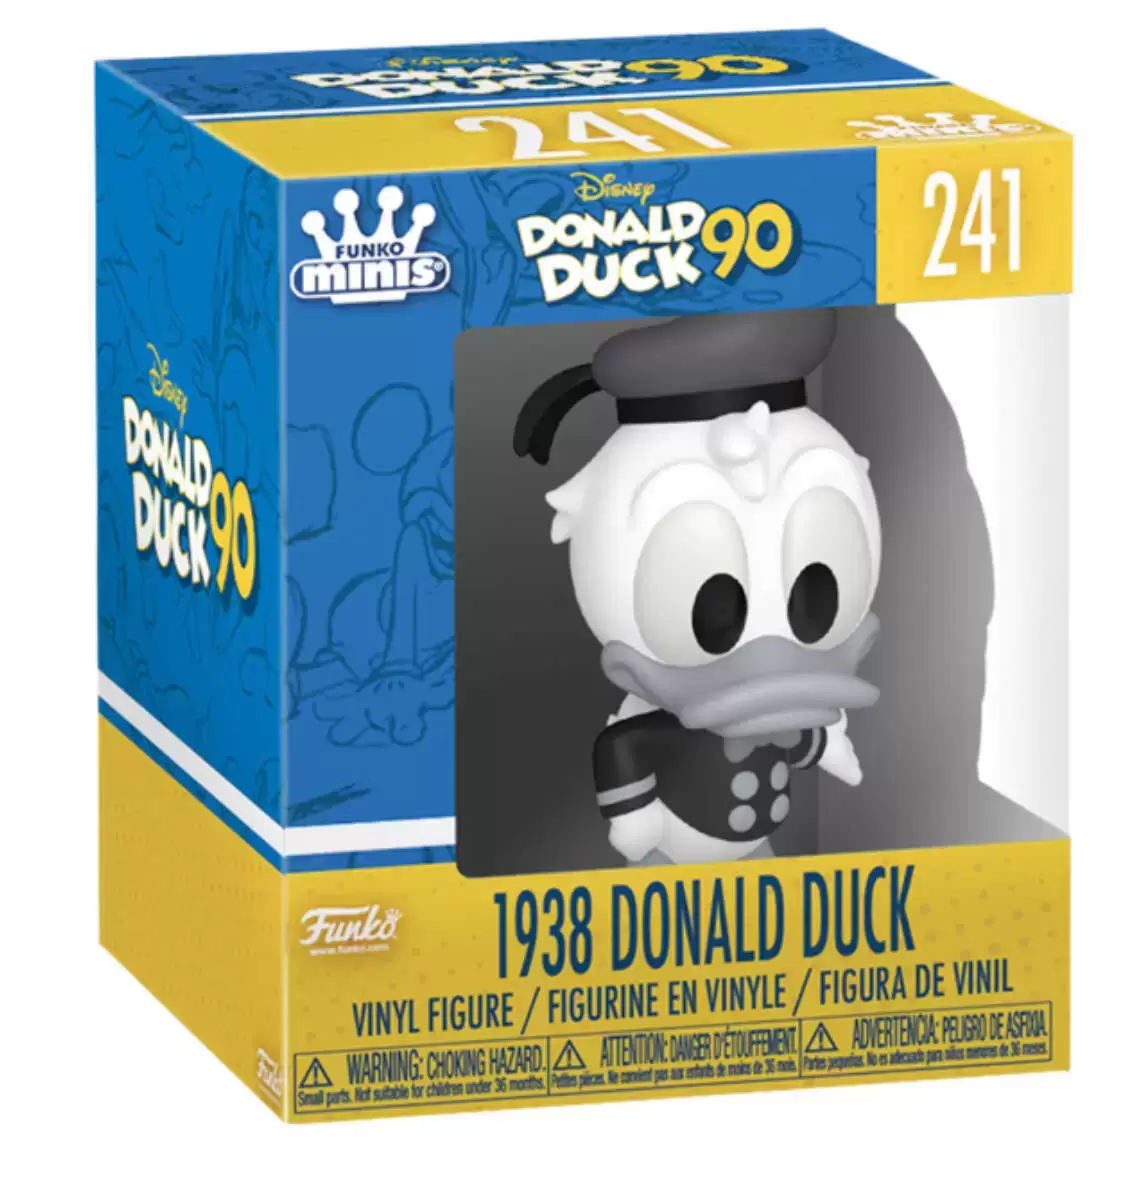 Funko Minis - Donald Duck 90  - 1938 Donald Duck